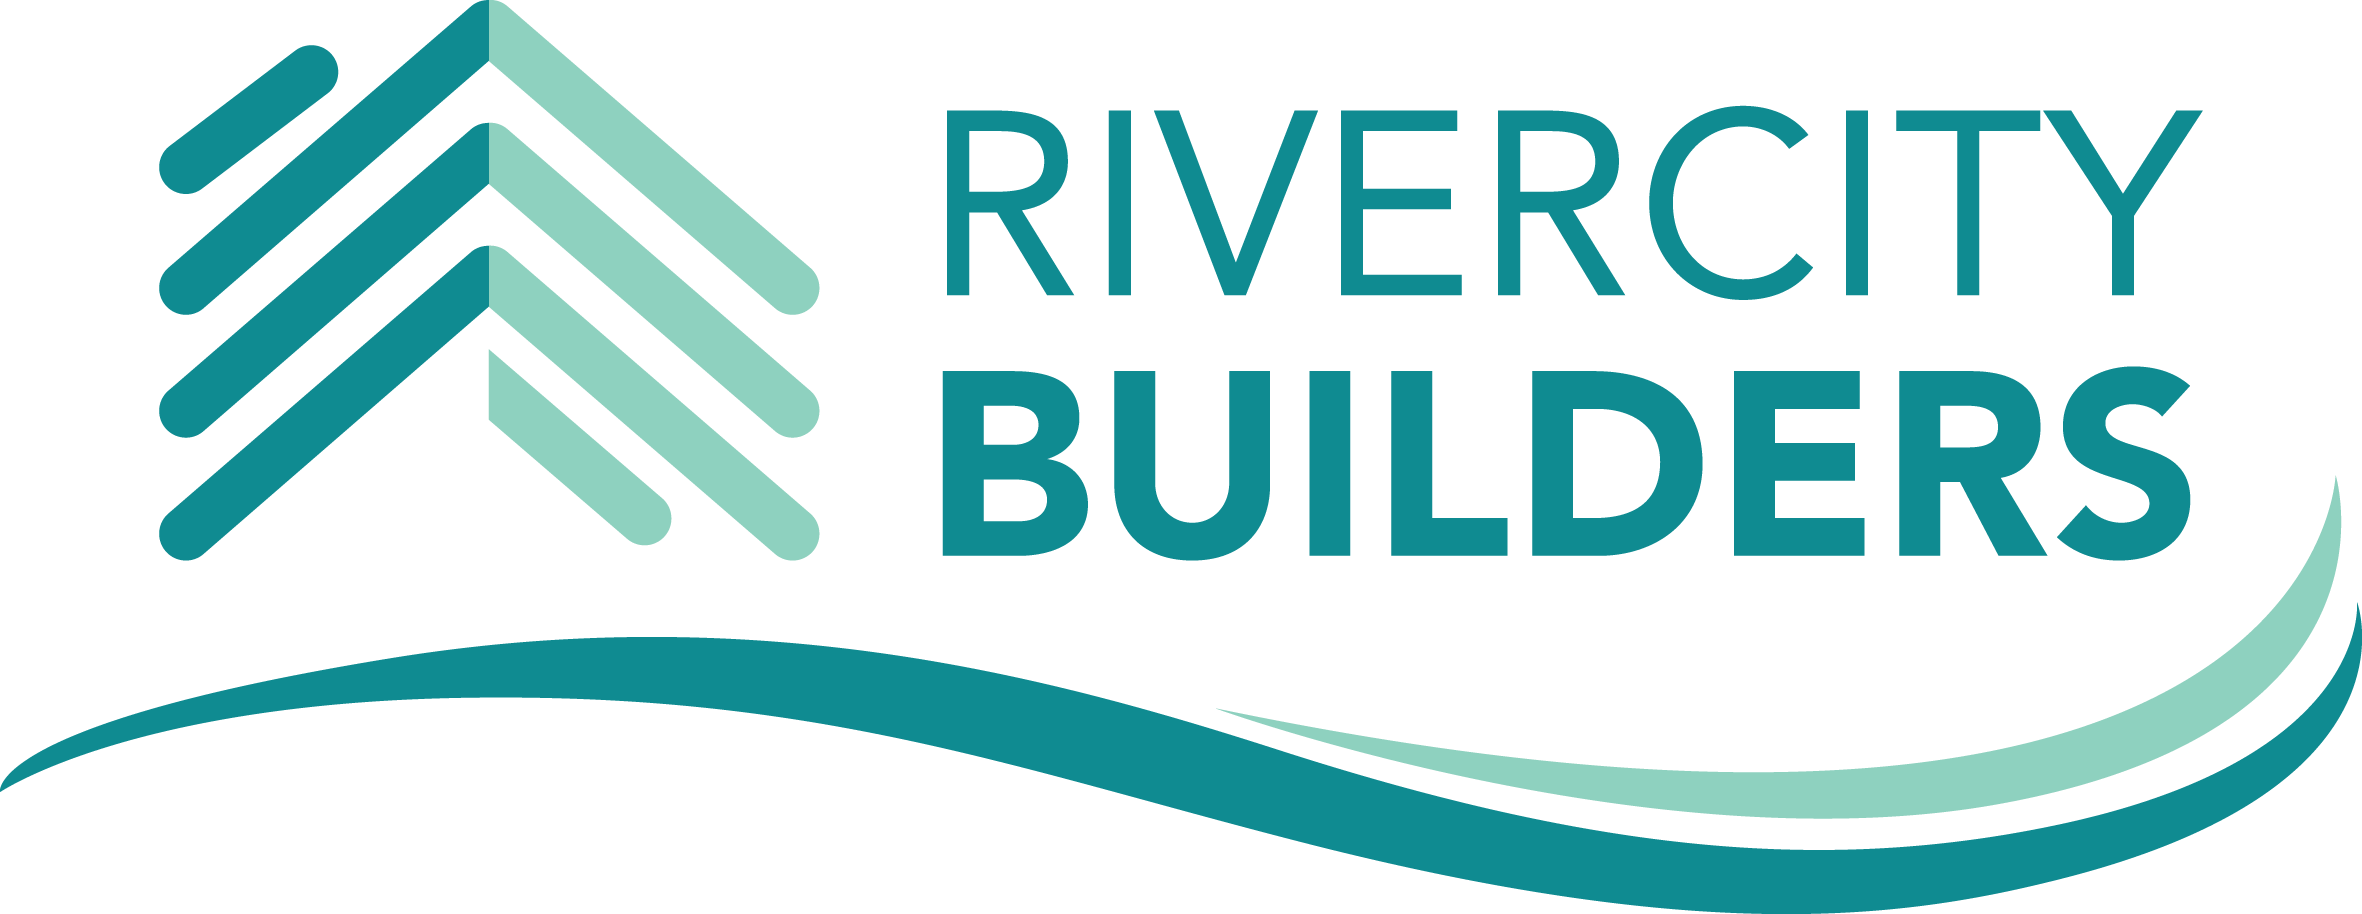 Rivercity Builders